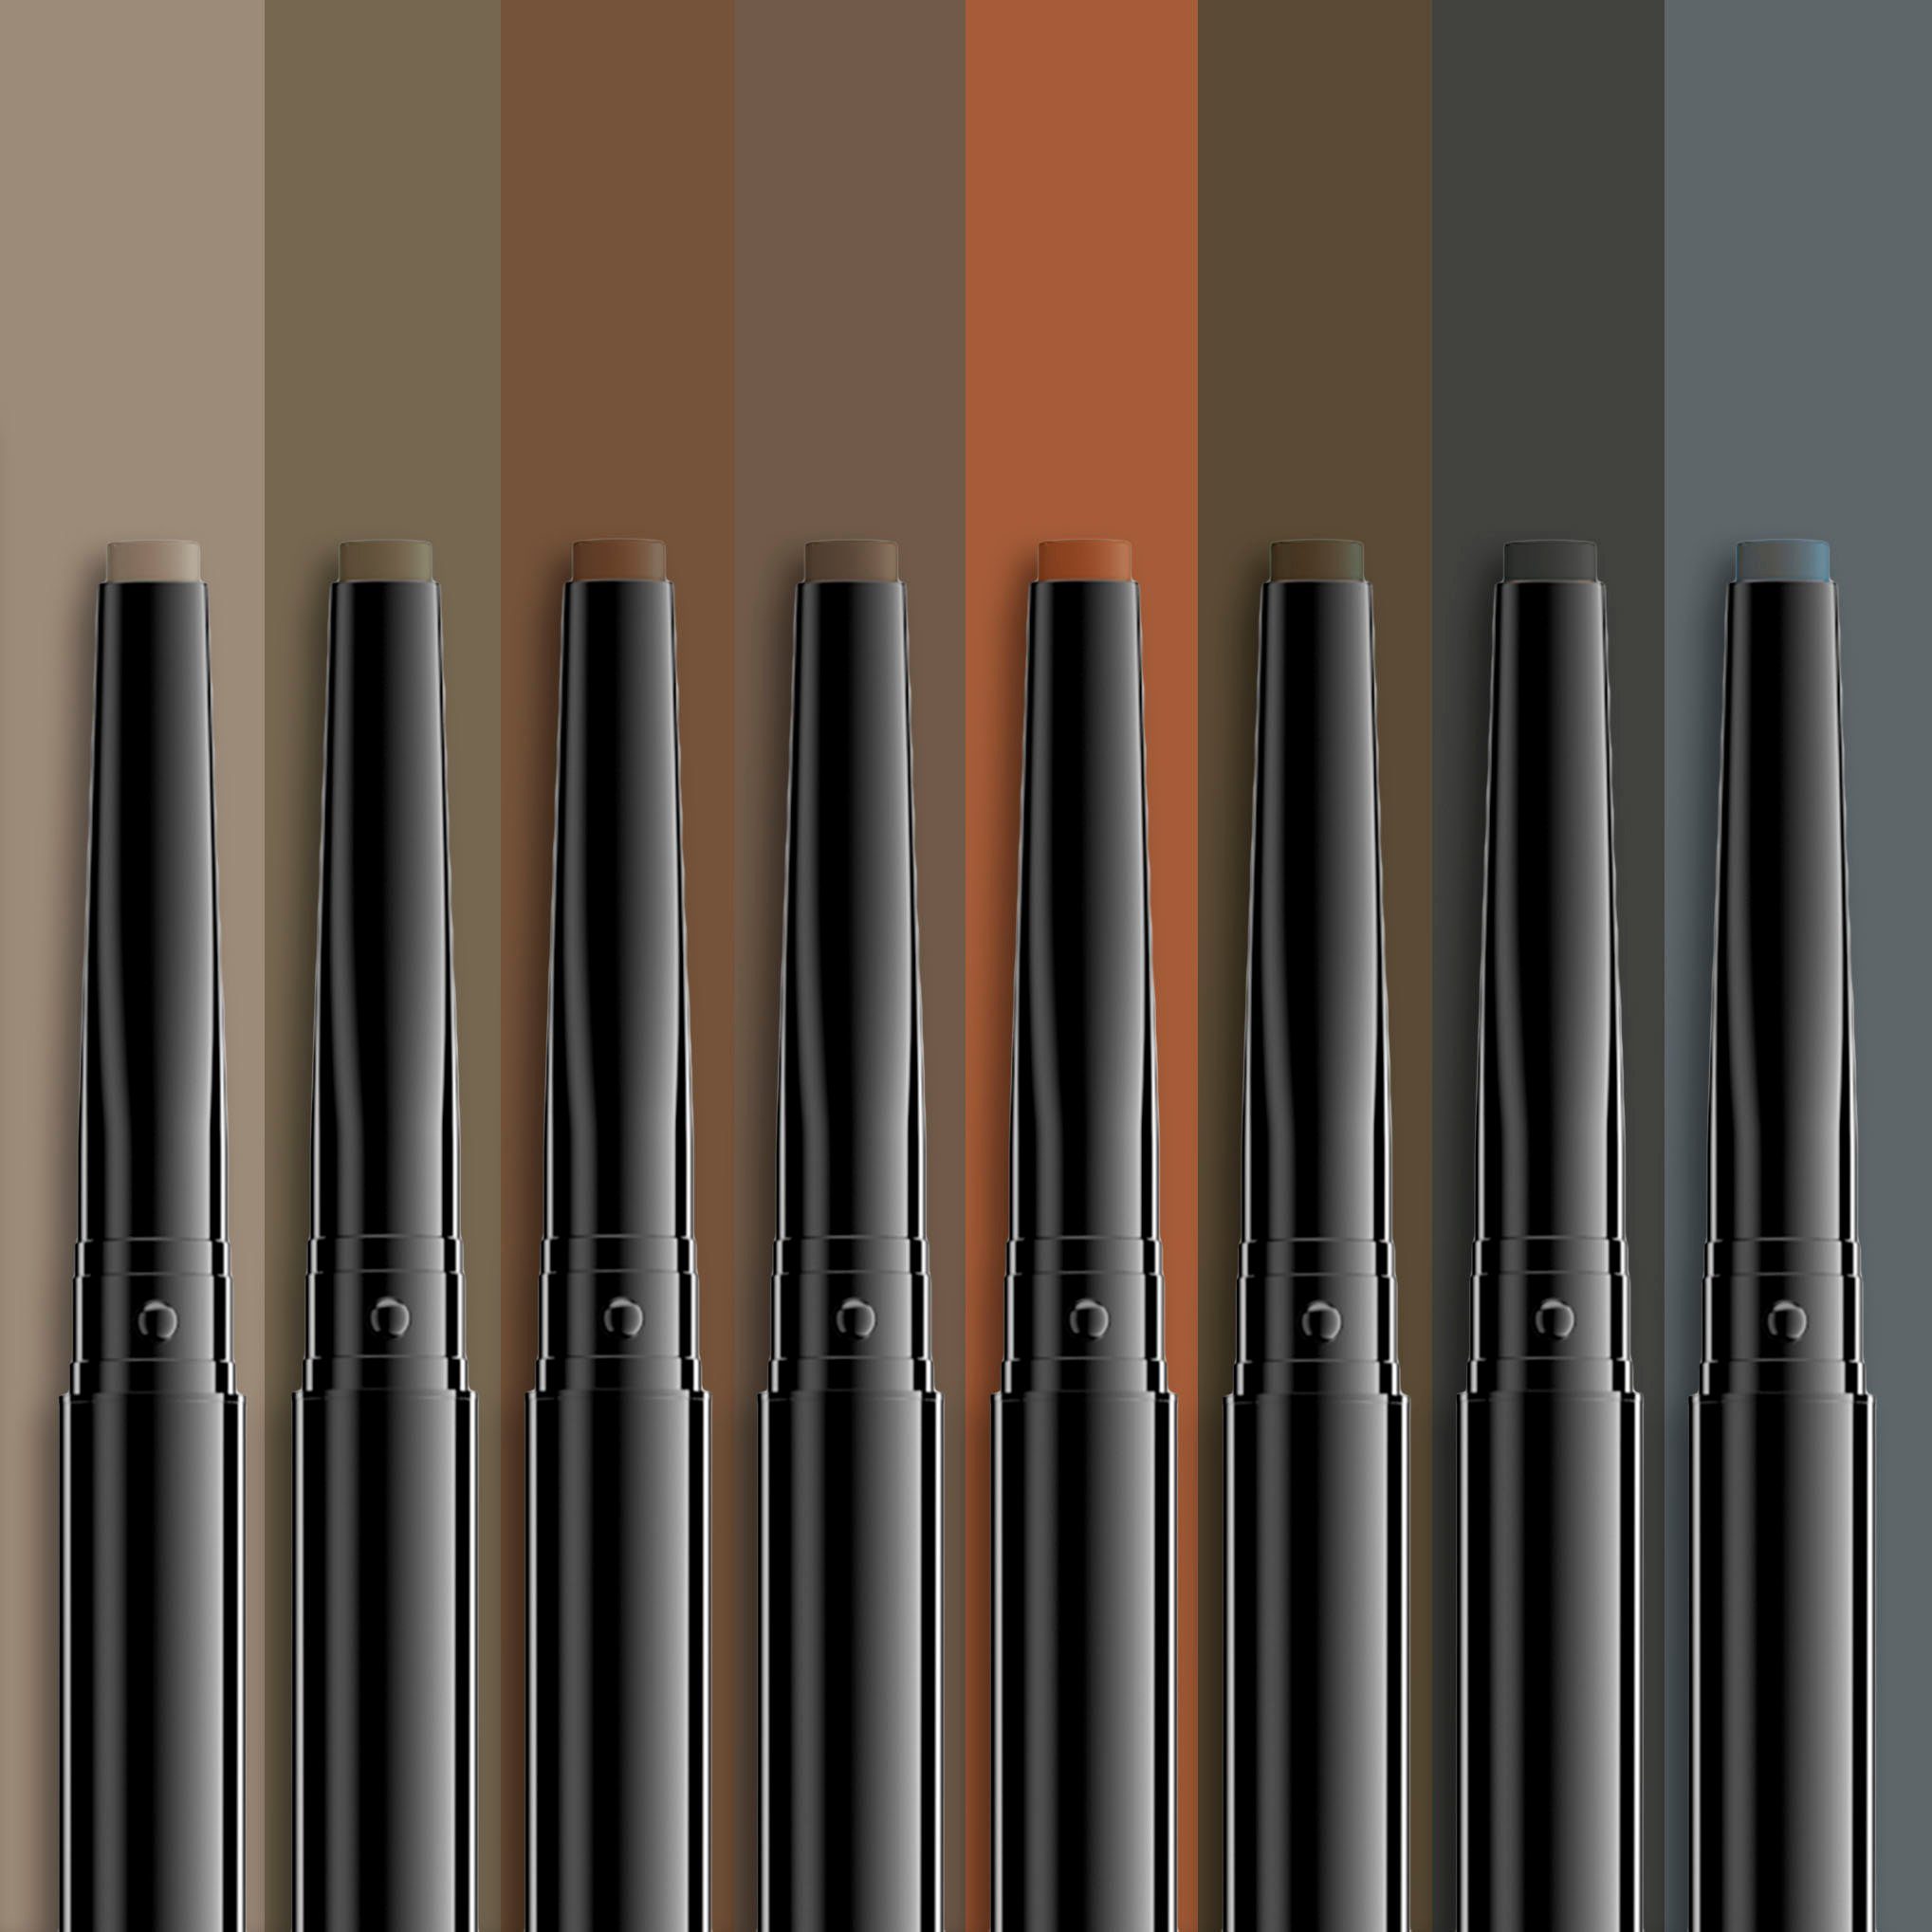 NYX Augenbrauen-Stift Professional Makeup Precision Pencil Brow taupe